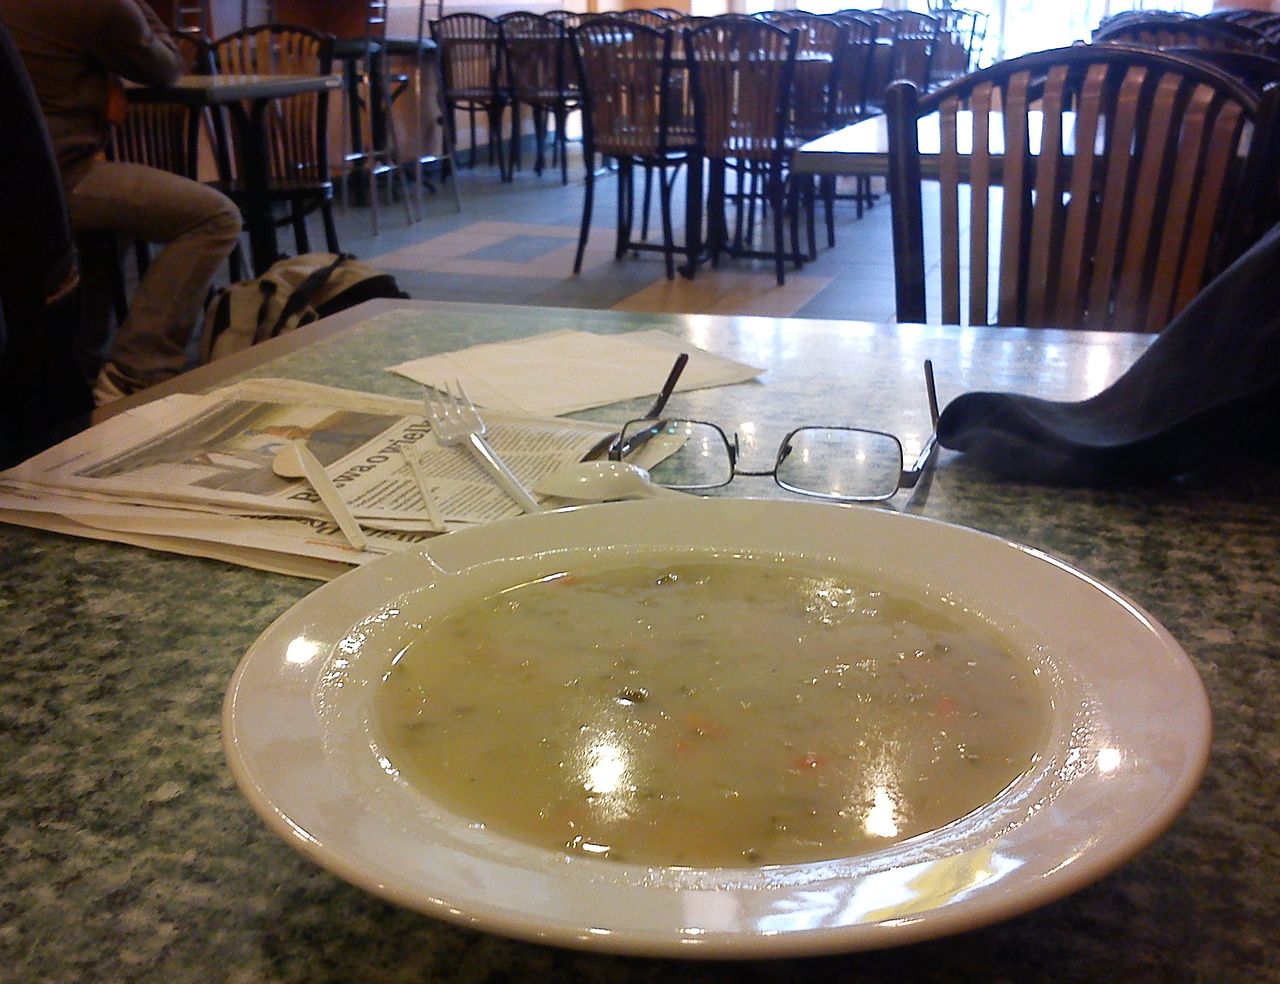 Cucumber soup in a milk bar, Poznan, Poland (Image: MOs810 under a CC licence)